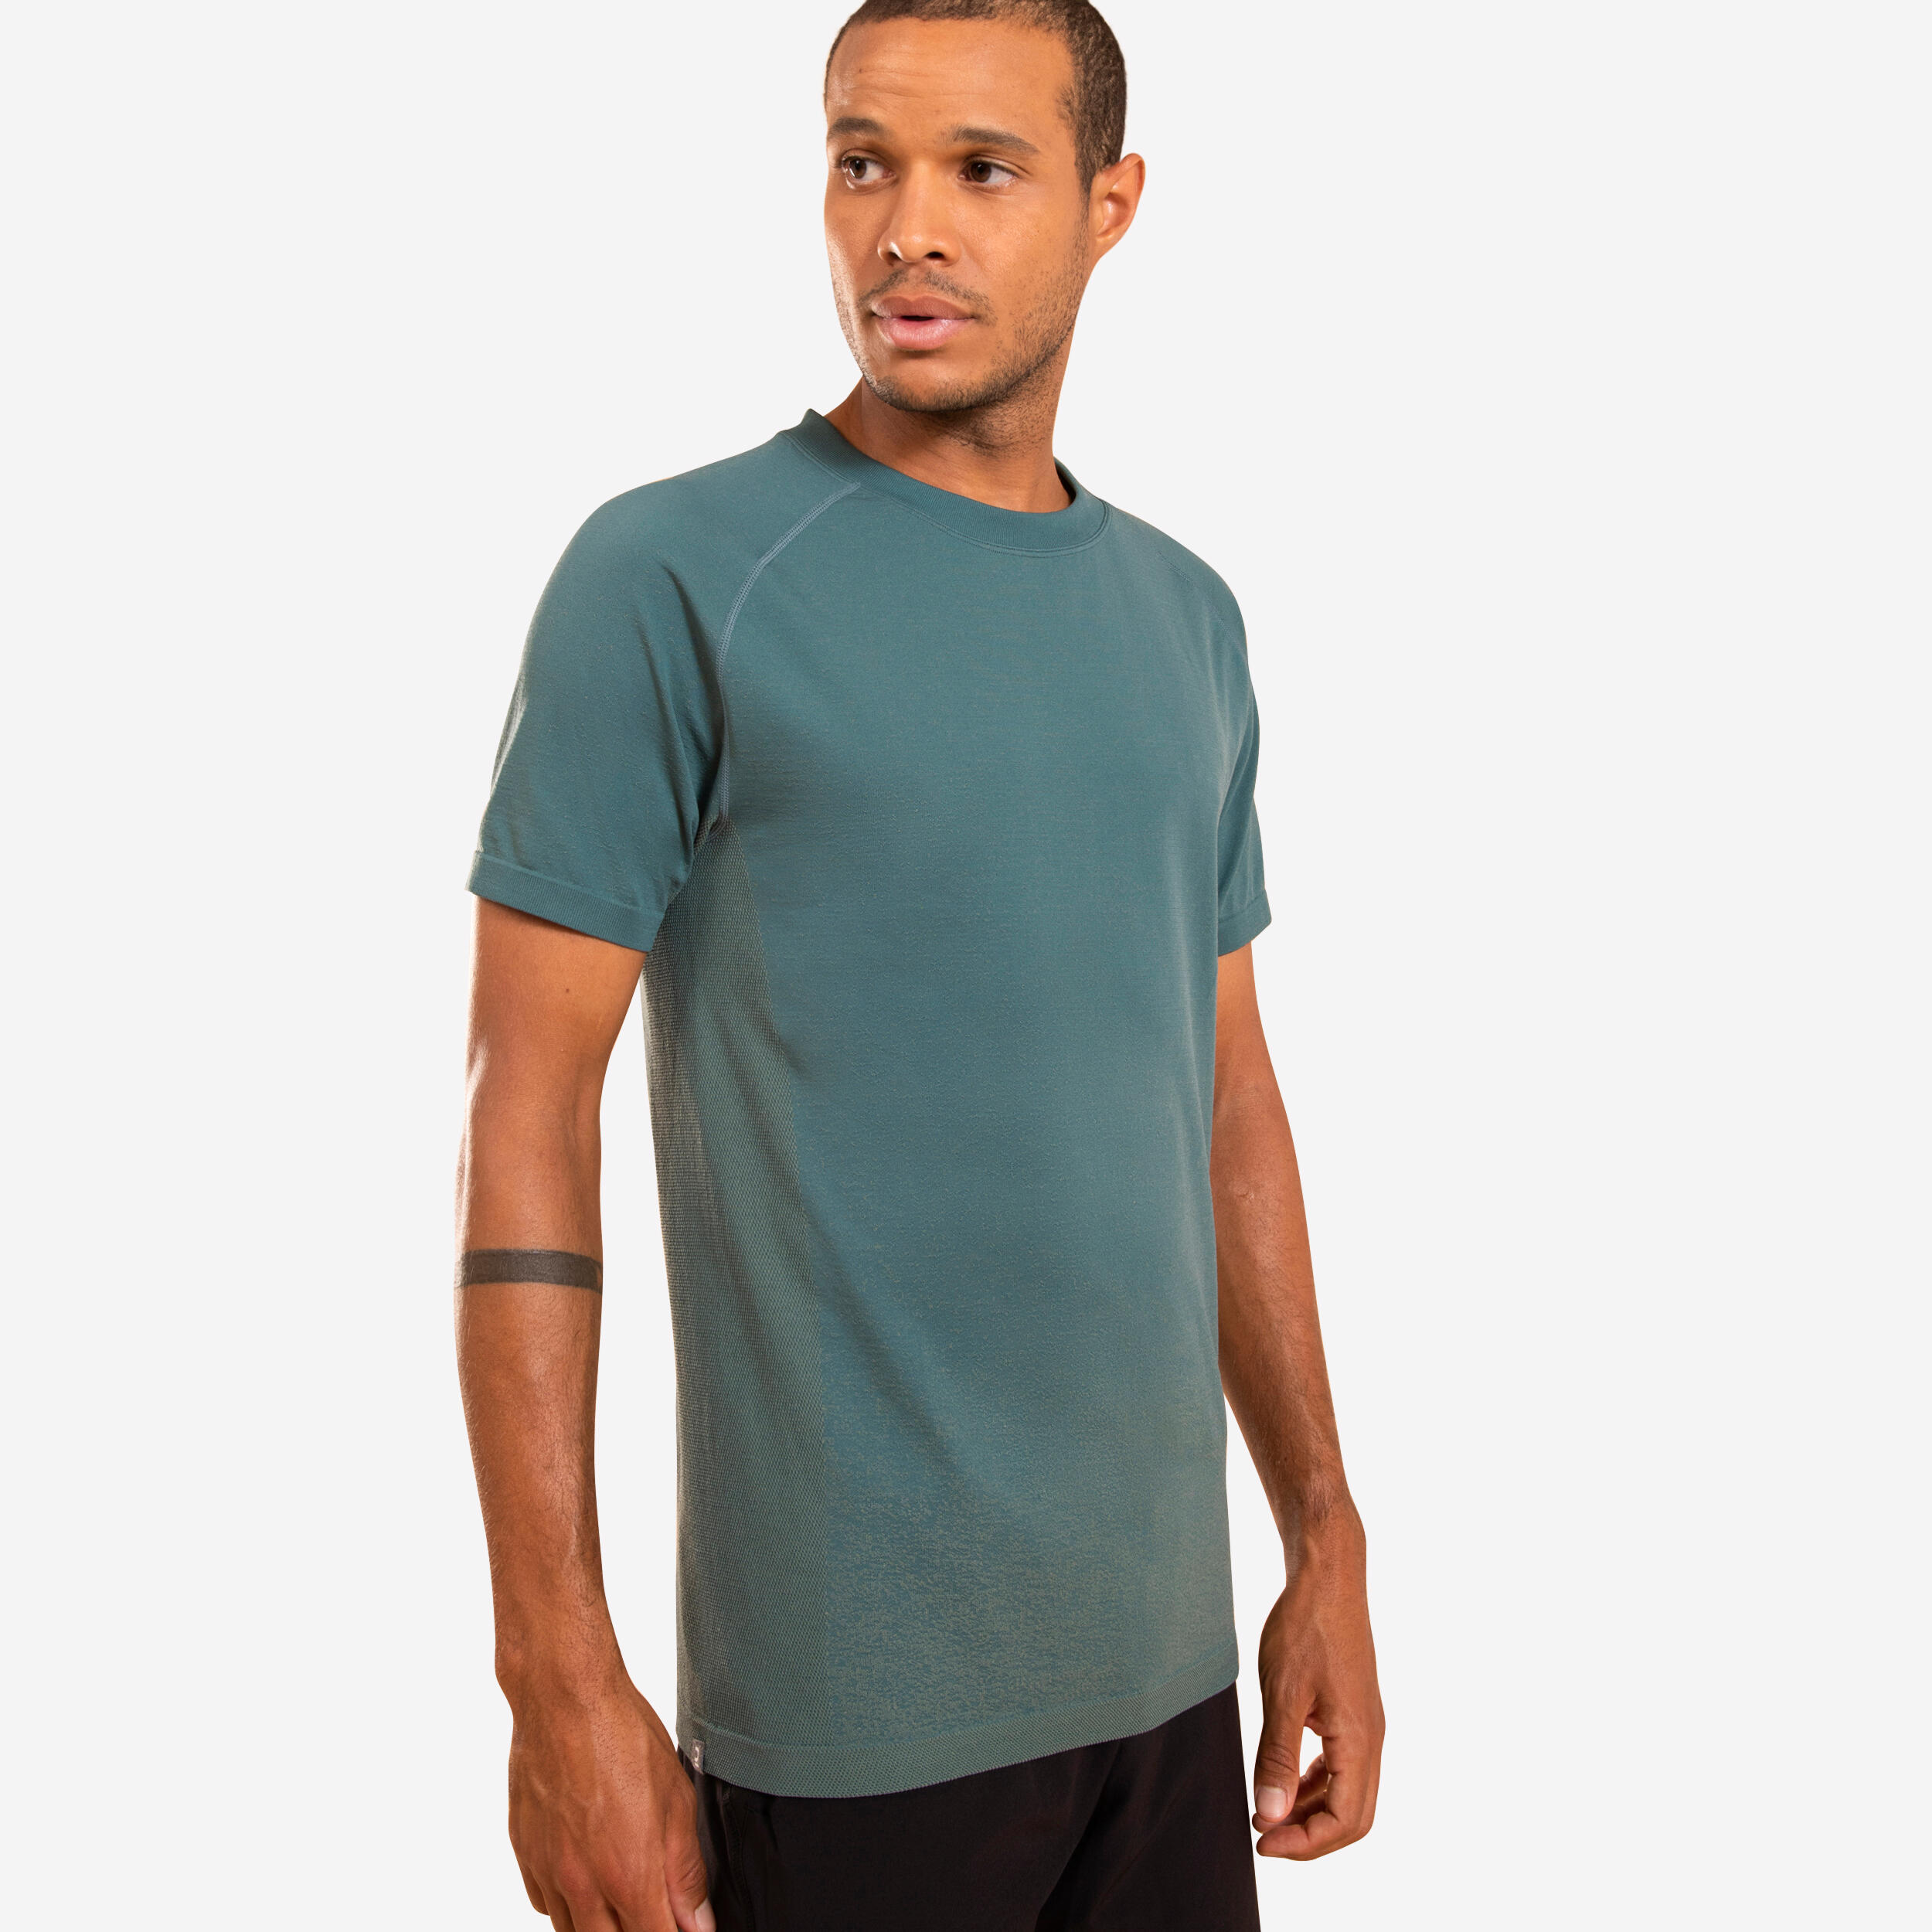 Men's Seamless Short-Sleeved Dynamic Yoga T-Shirt - Khaki 1/4